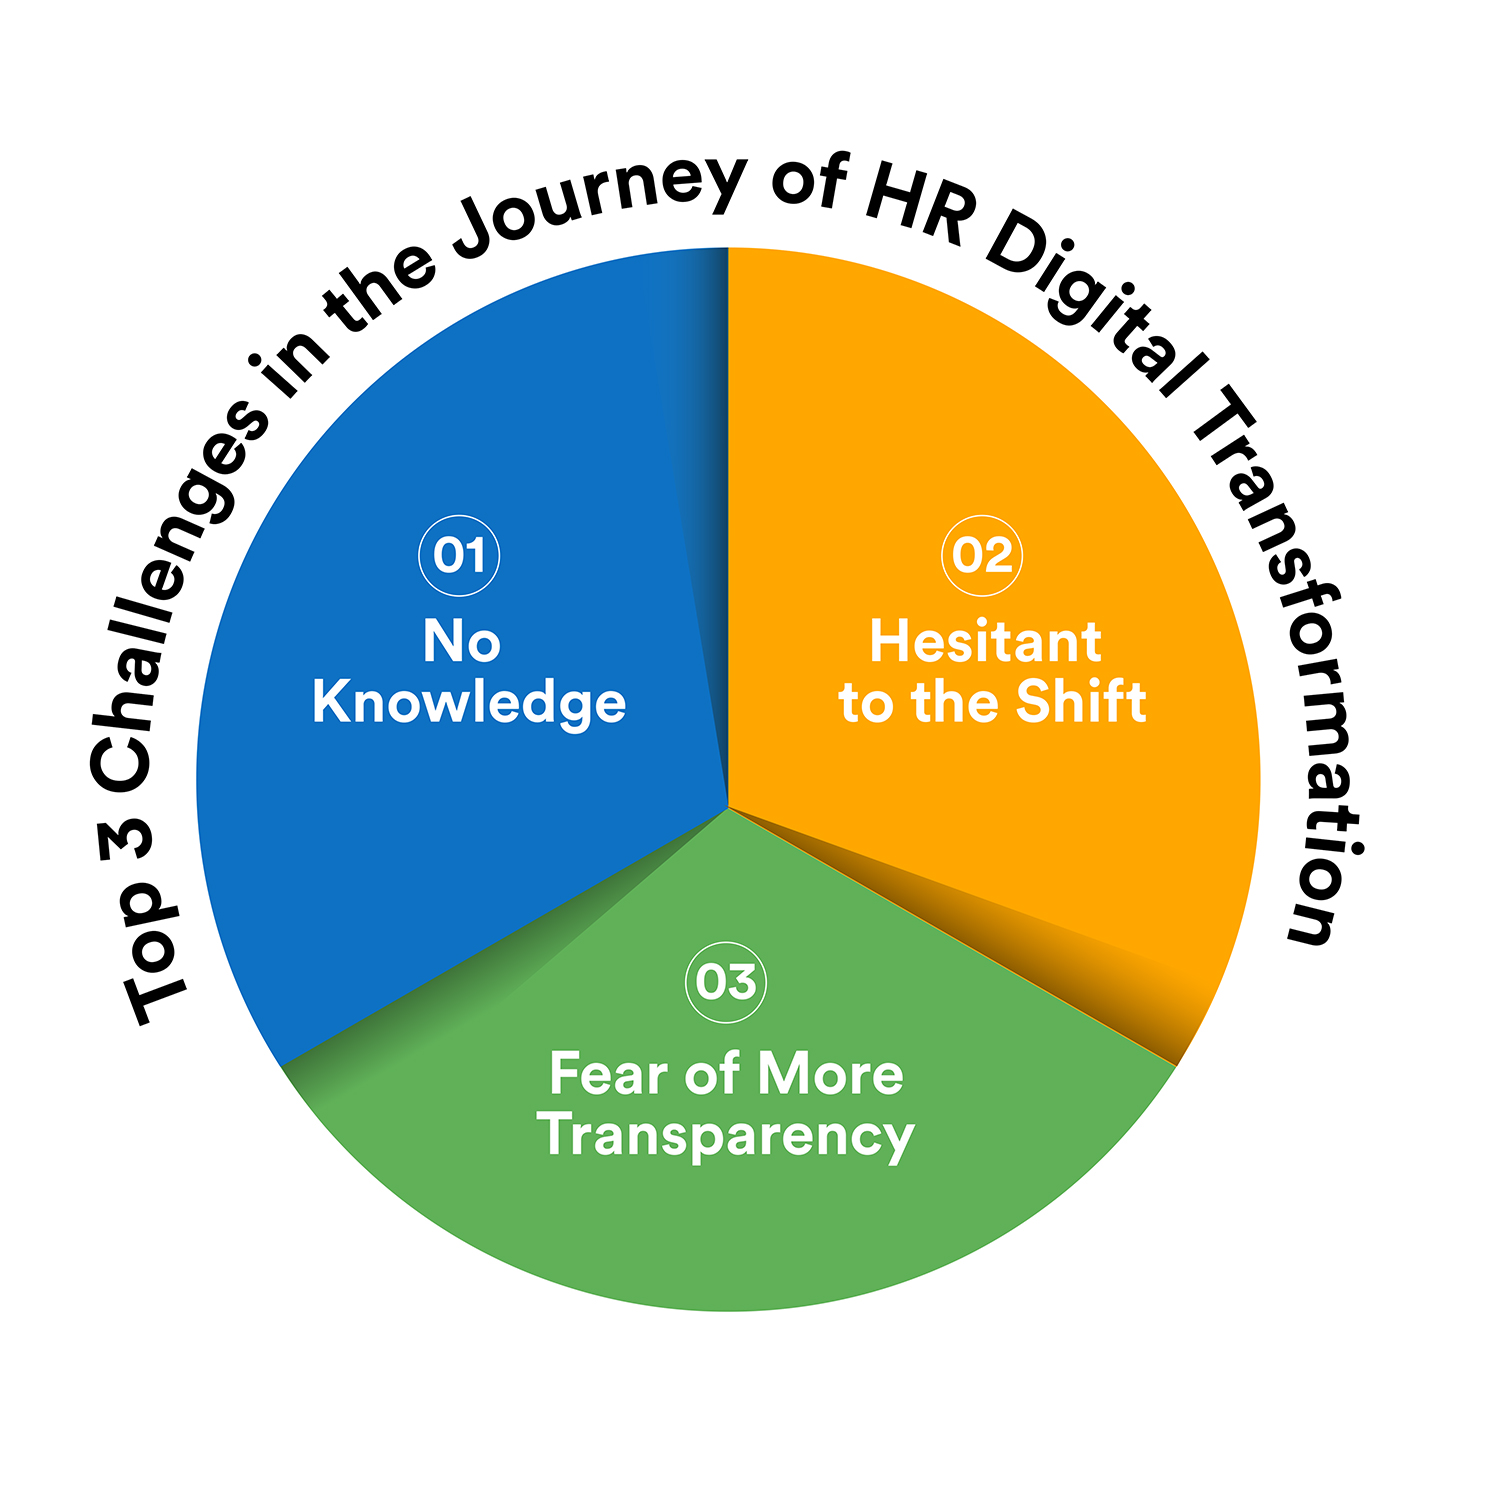 Biggest Challenges & Solutions for HR Digital Transformation